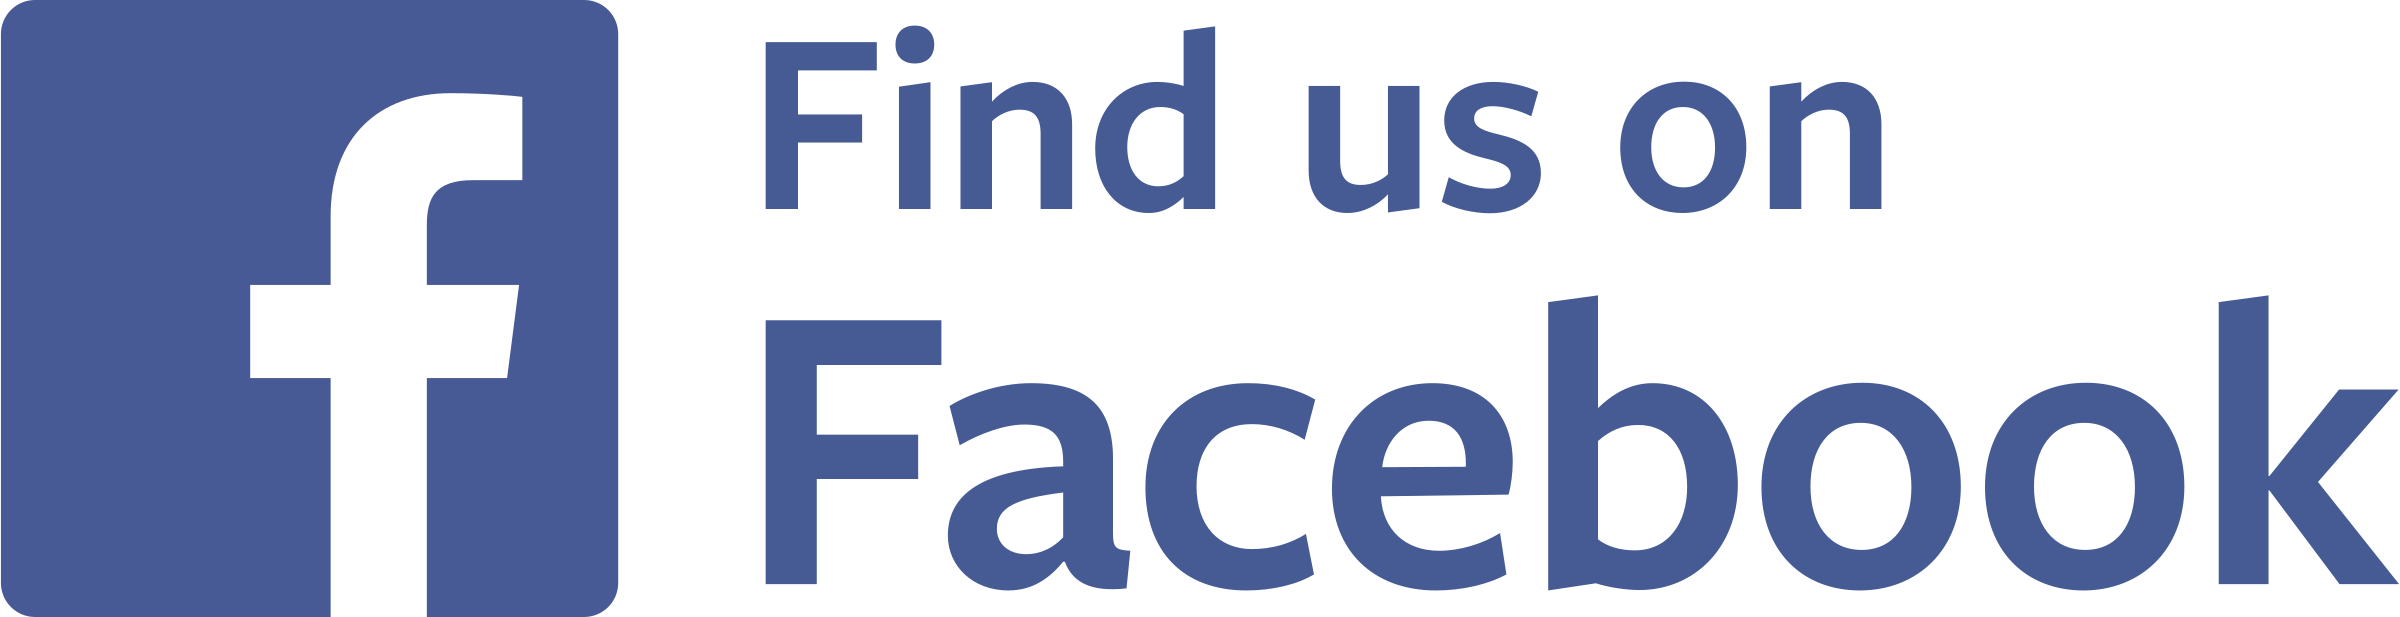 Square Facebook Logo Images Transparentes